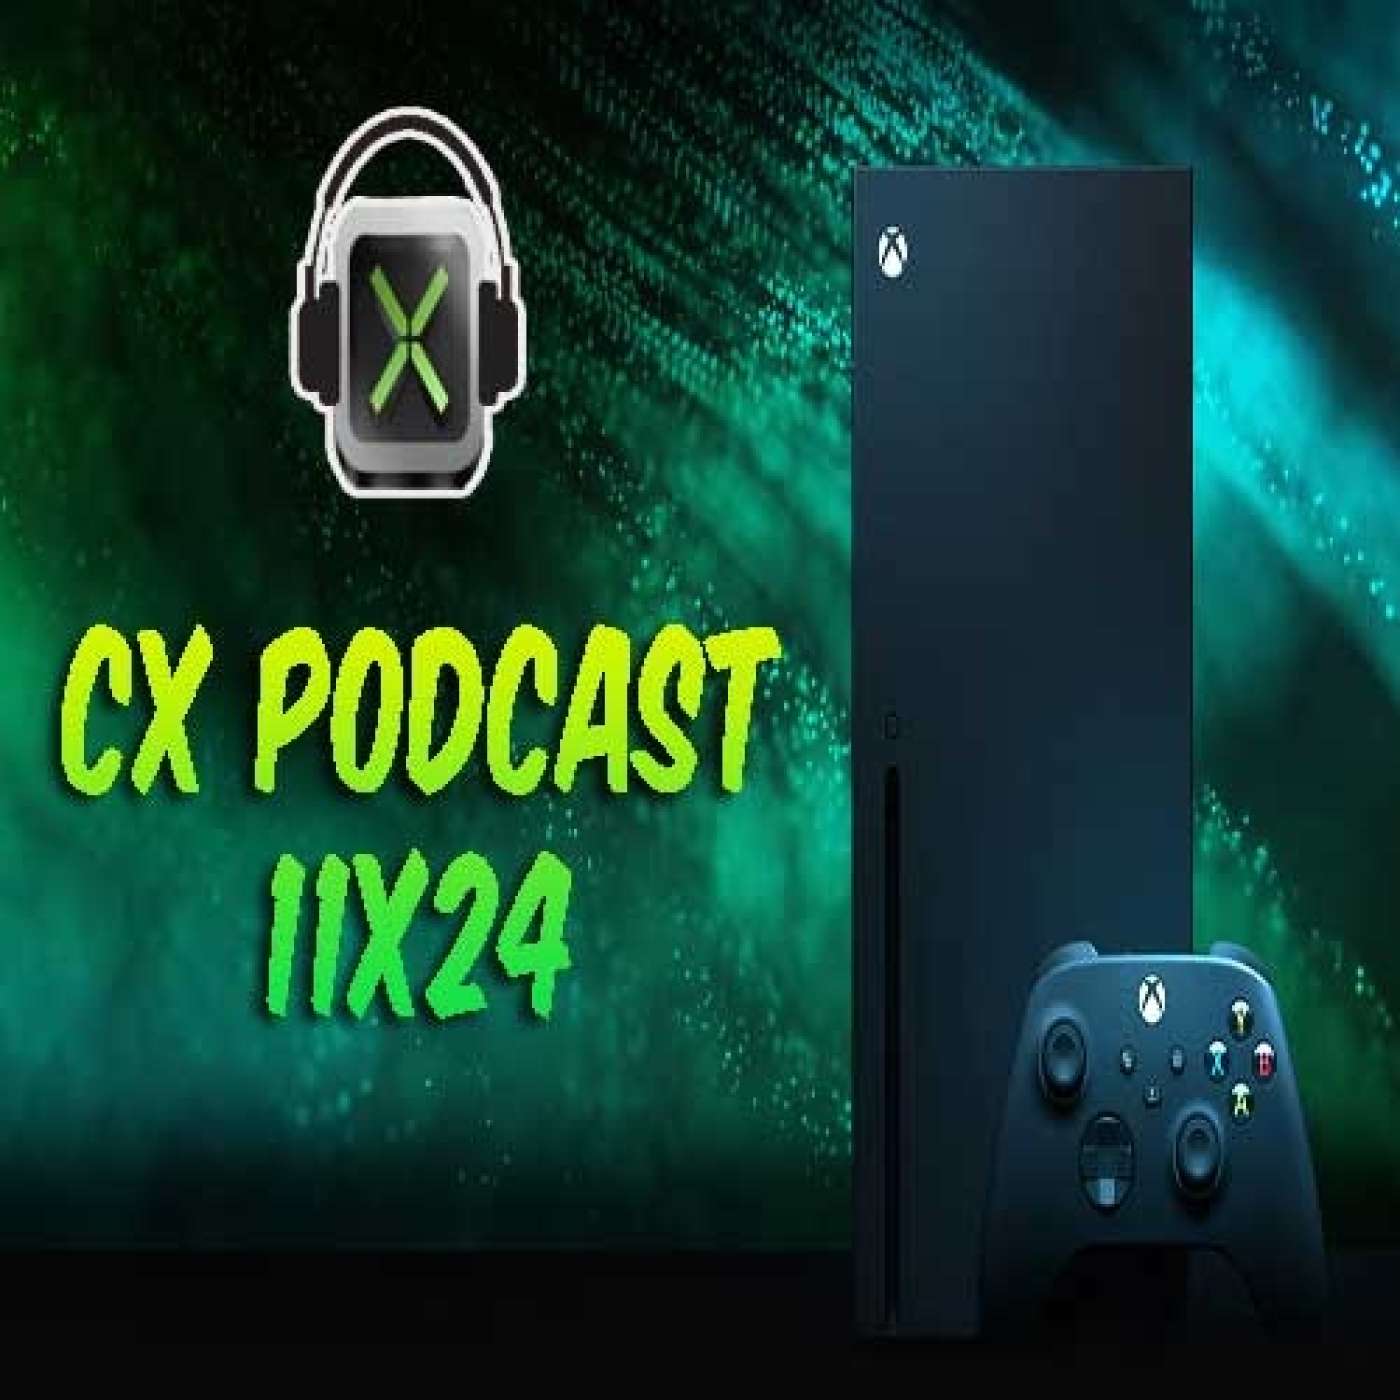 CX Podcast 11x24 - El futuro de Xbox